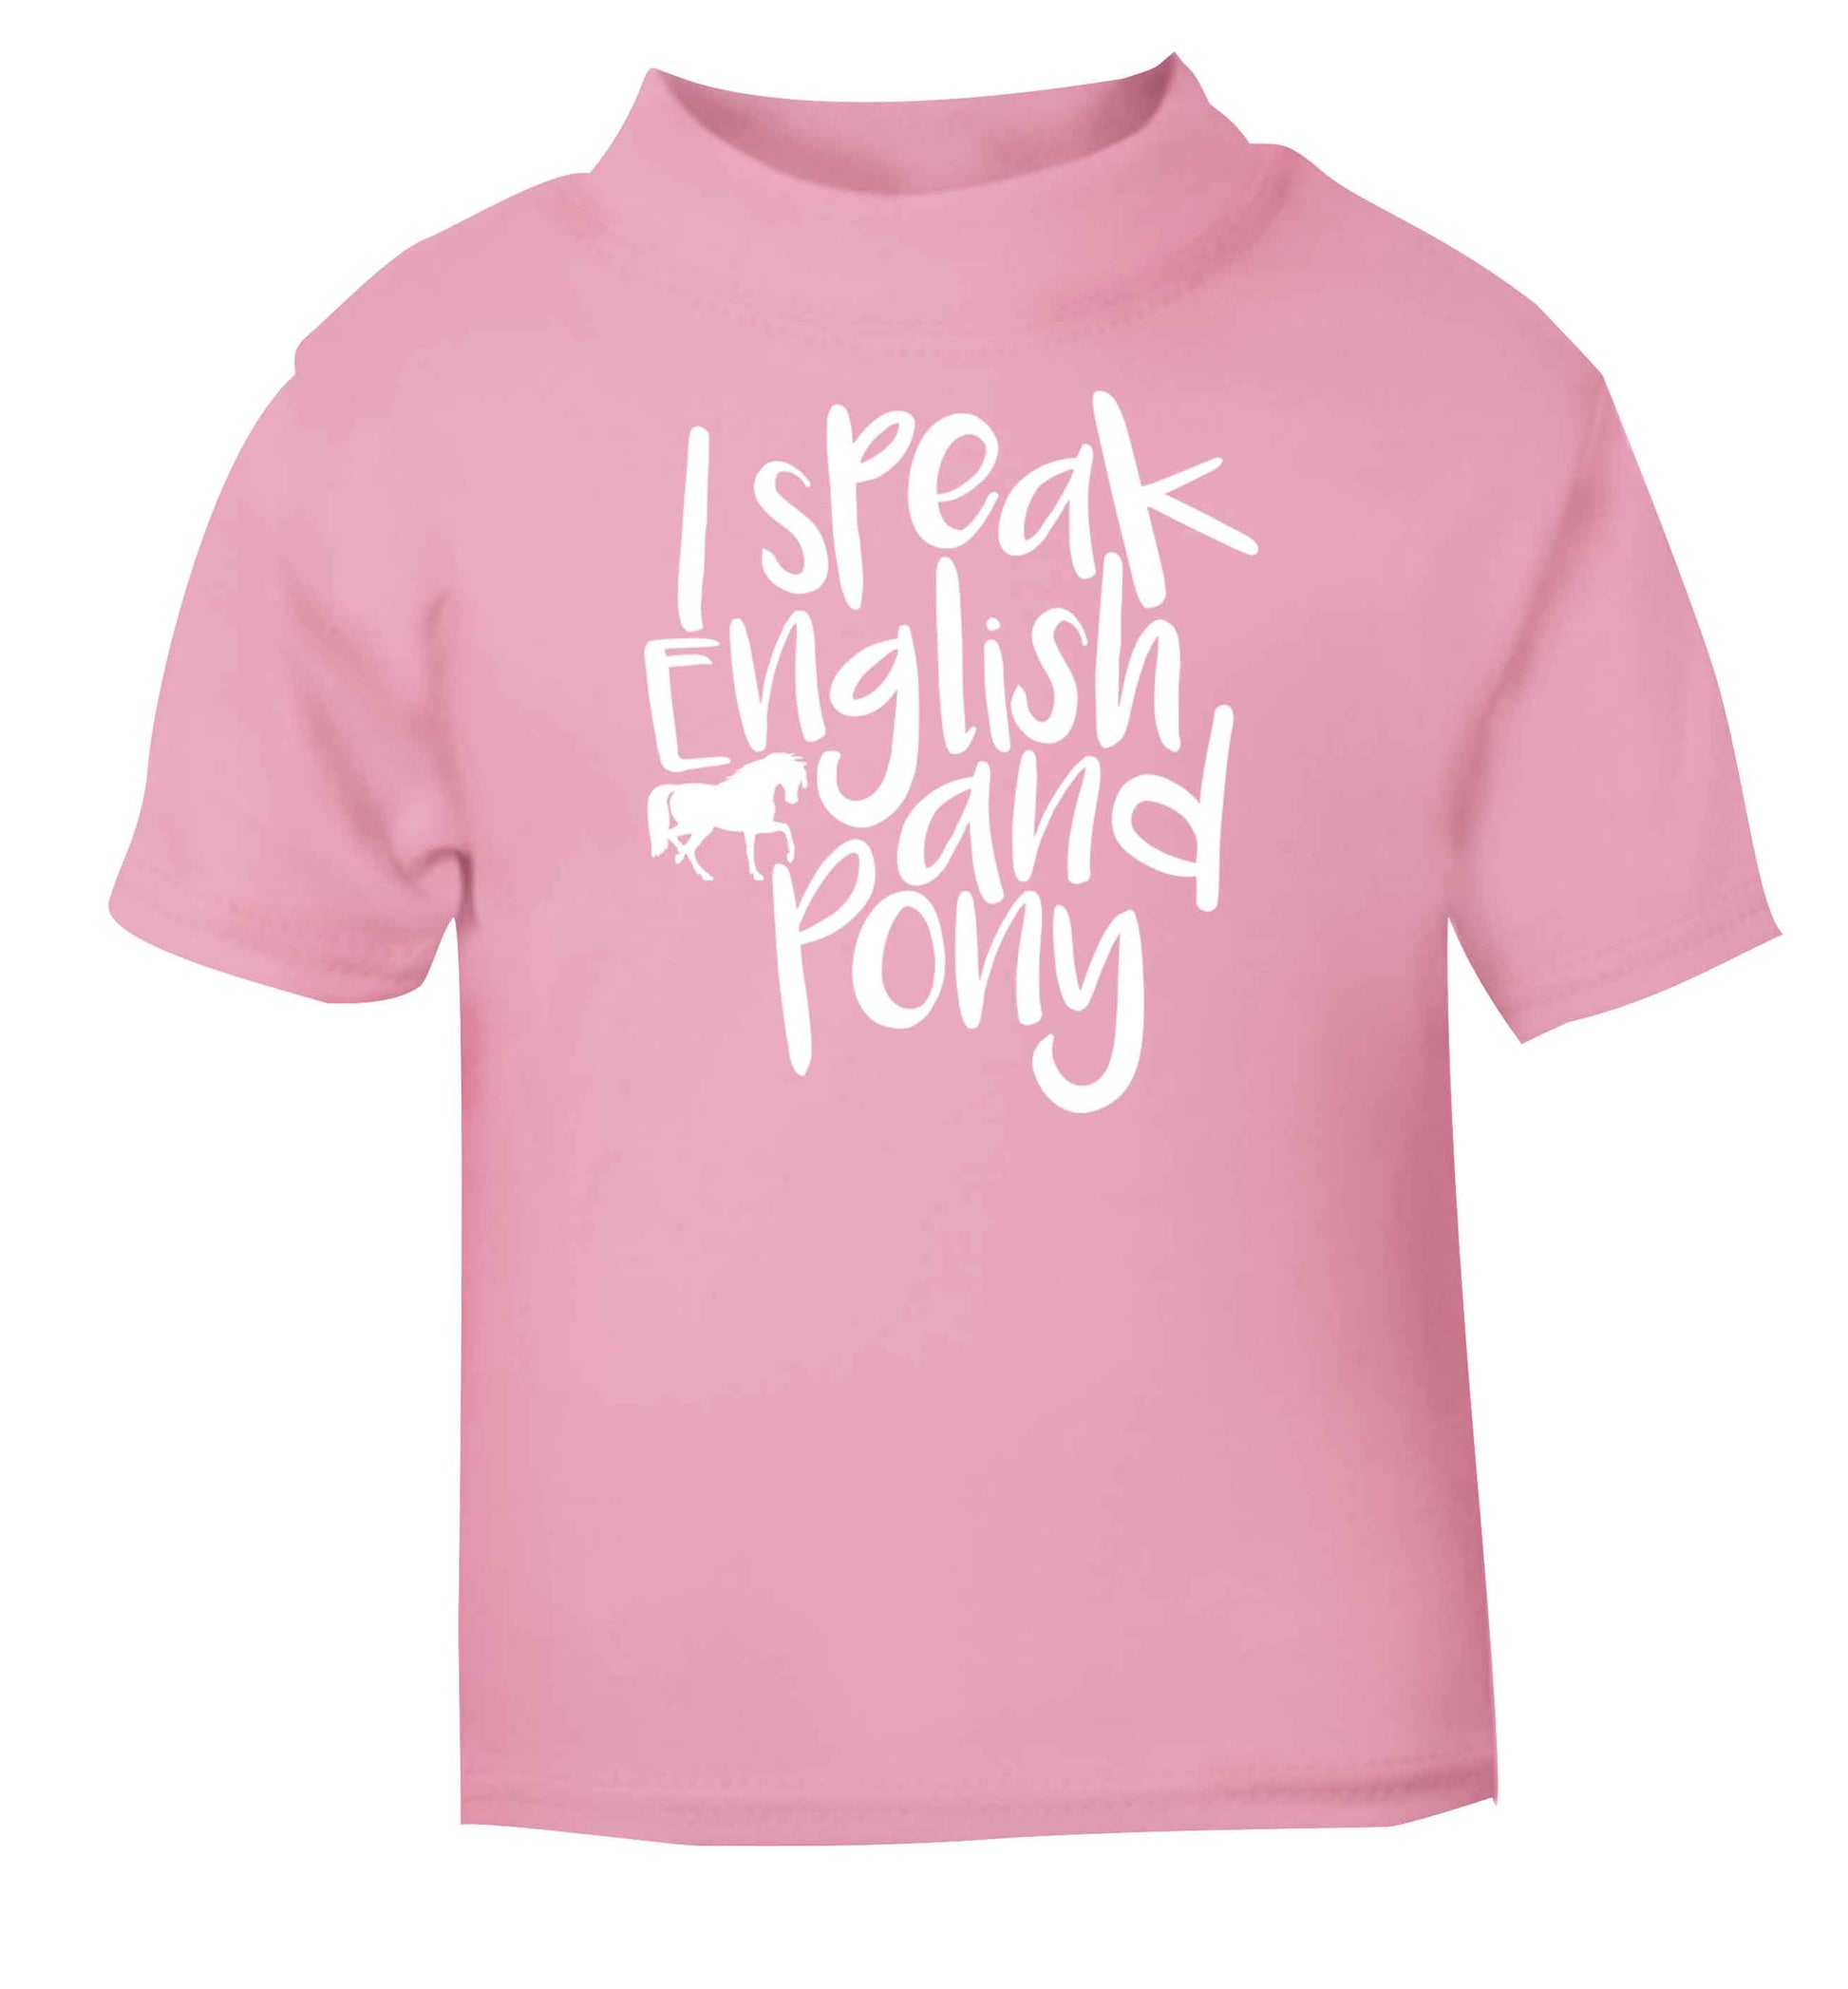 I speak English and pony light pink baby toddler Tshirt 2 Years